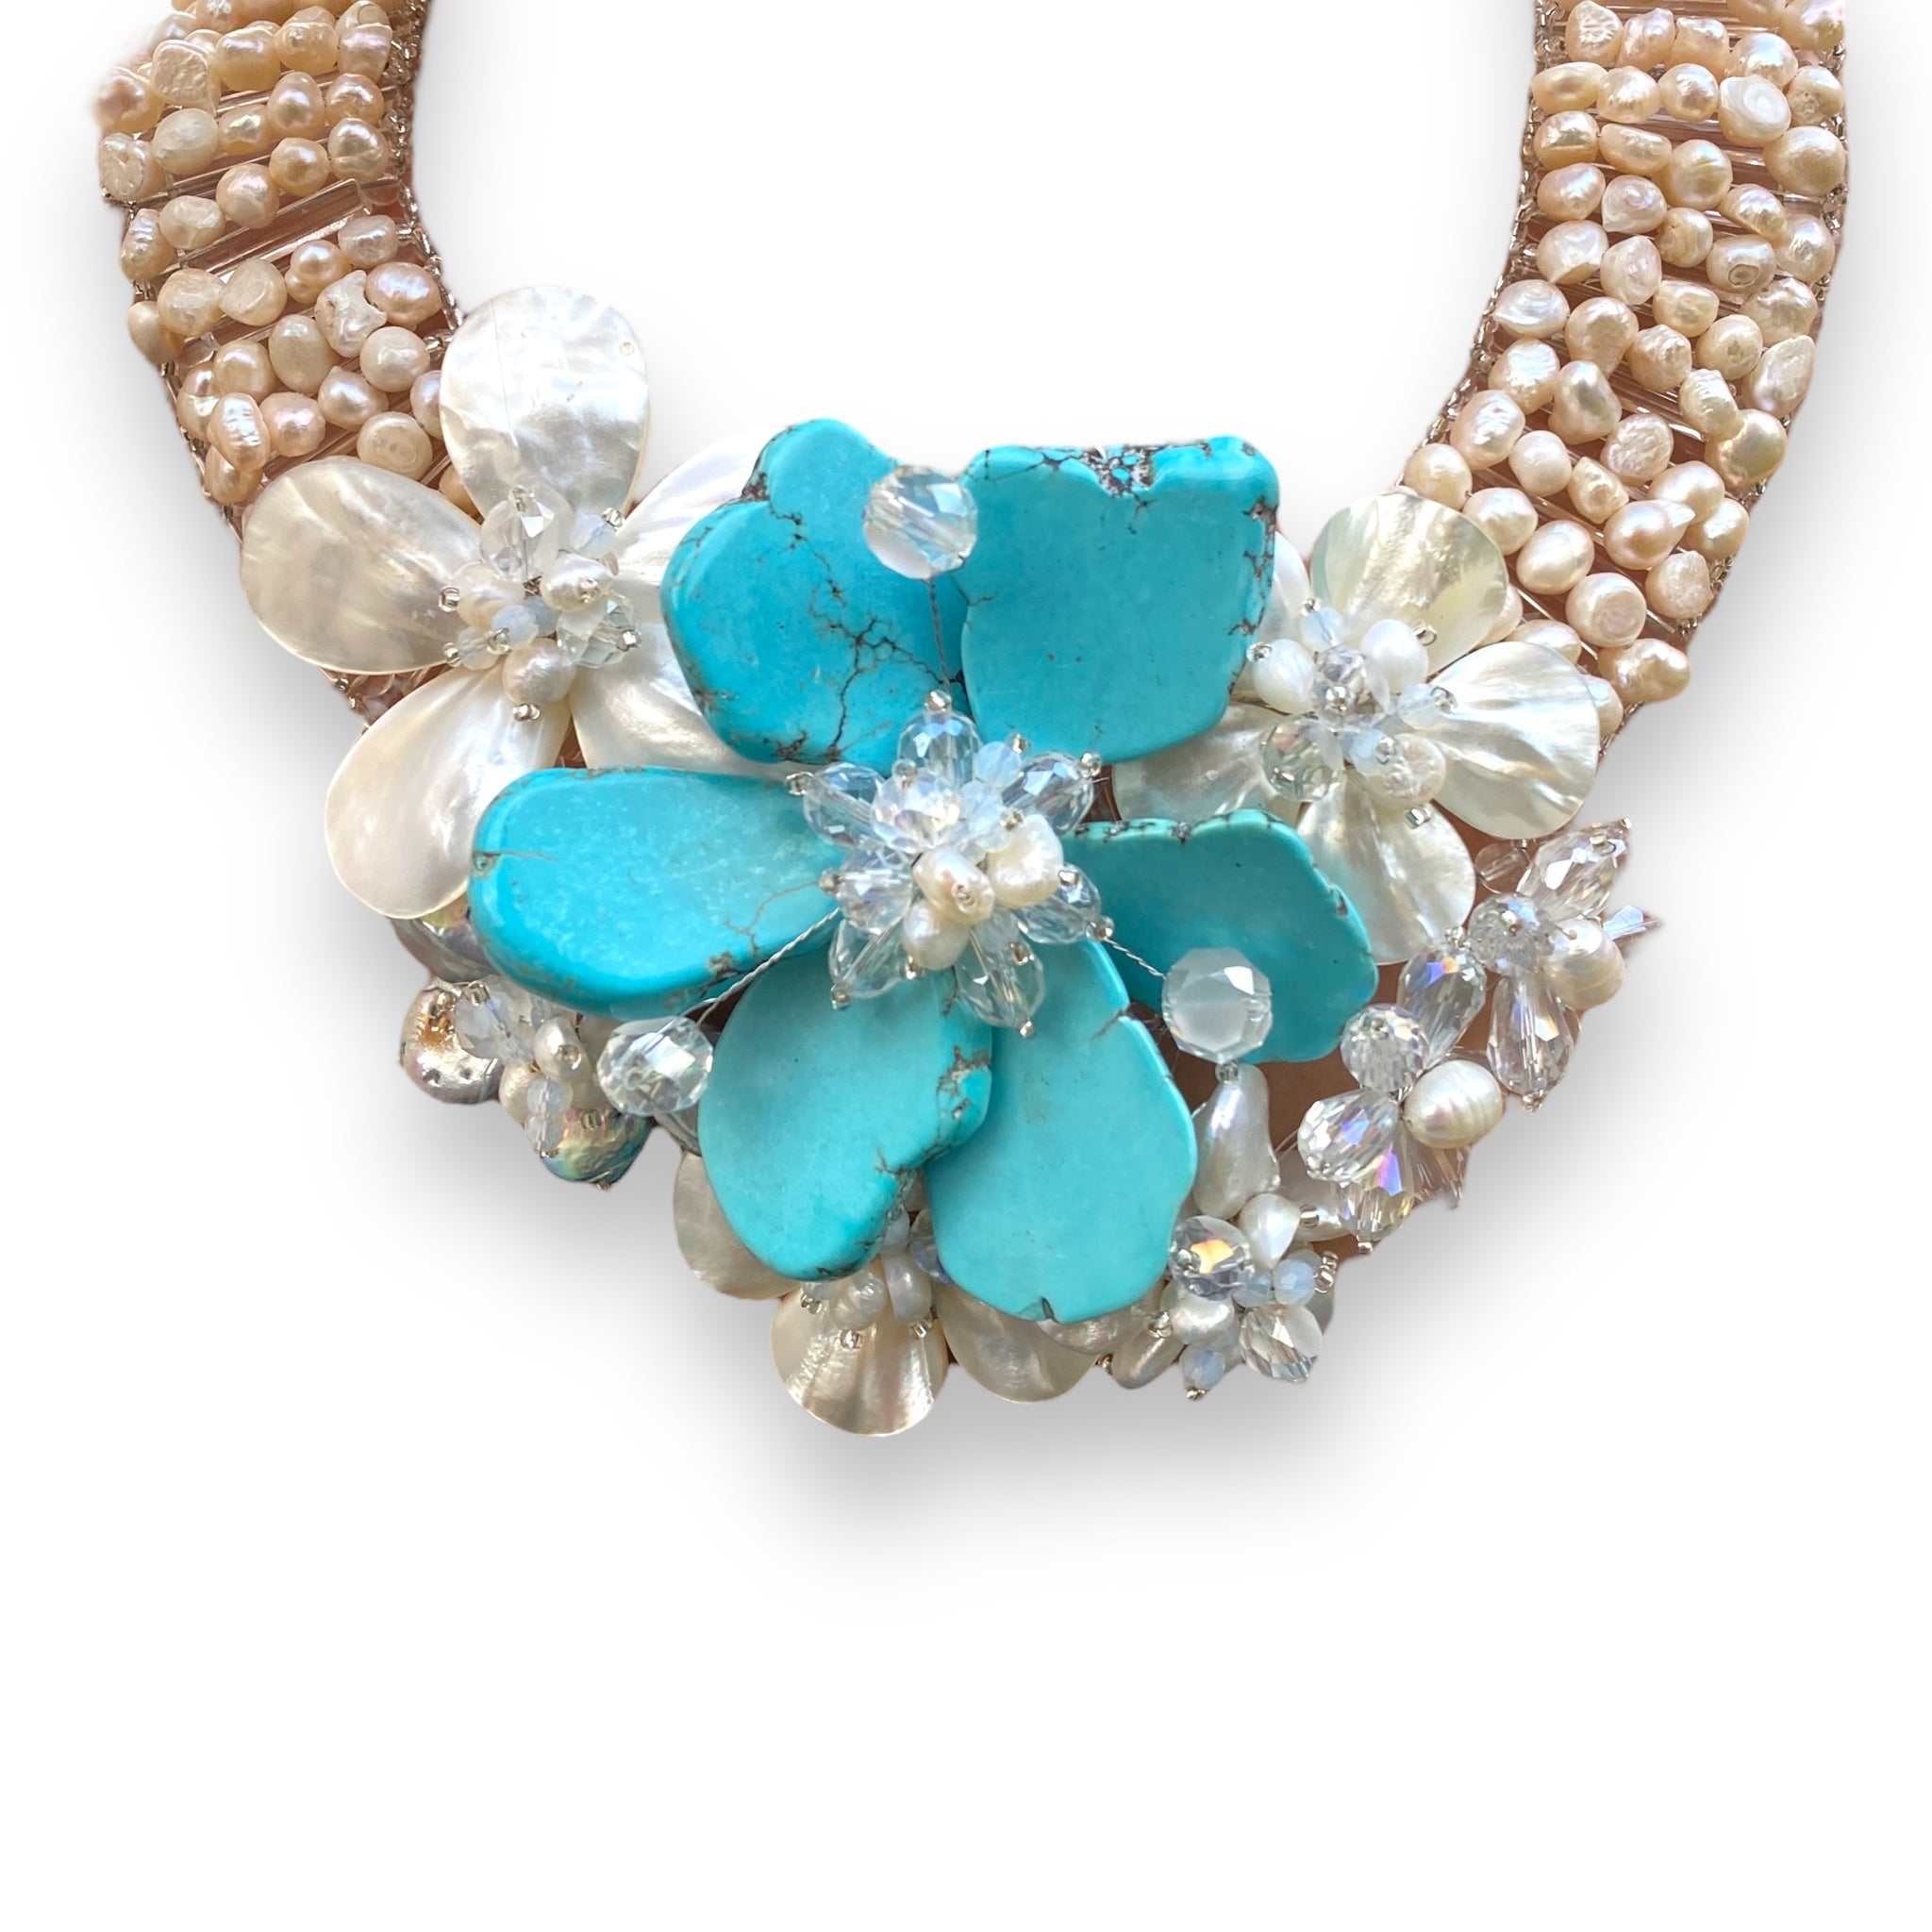 Handmade Pendant Necklace Spring Flowers 21" Turquoise Freshwater Pearls Bib Choker